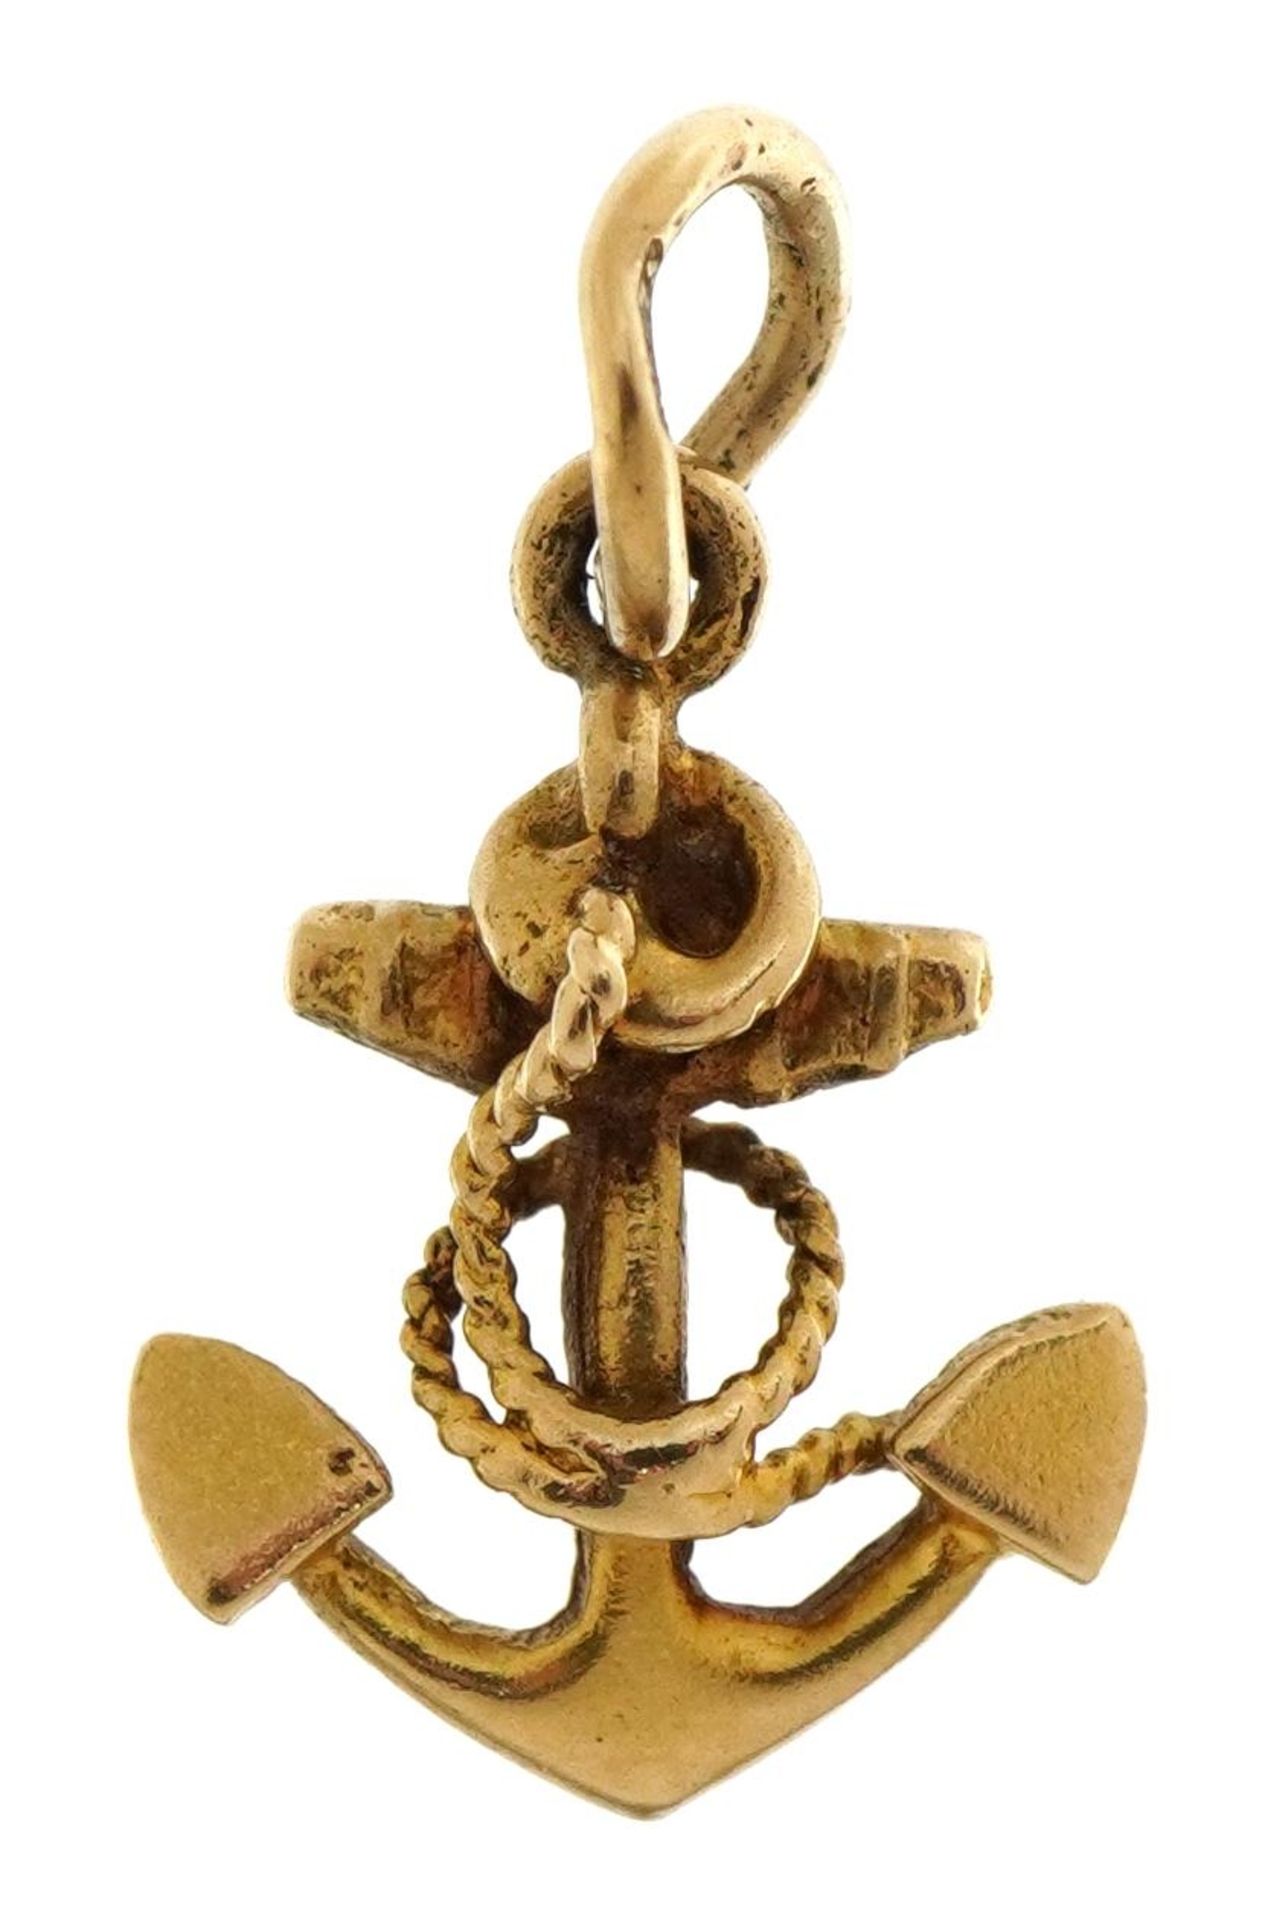 9ct gold anchor charm, 1.4cm high, 0.7g